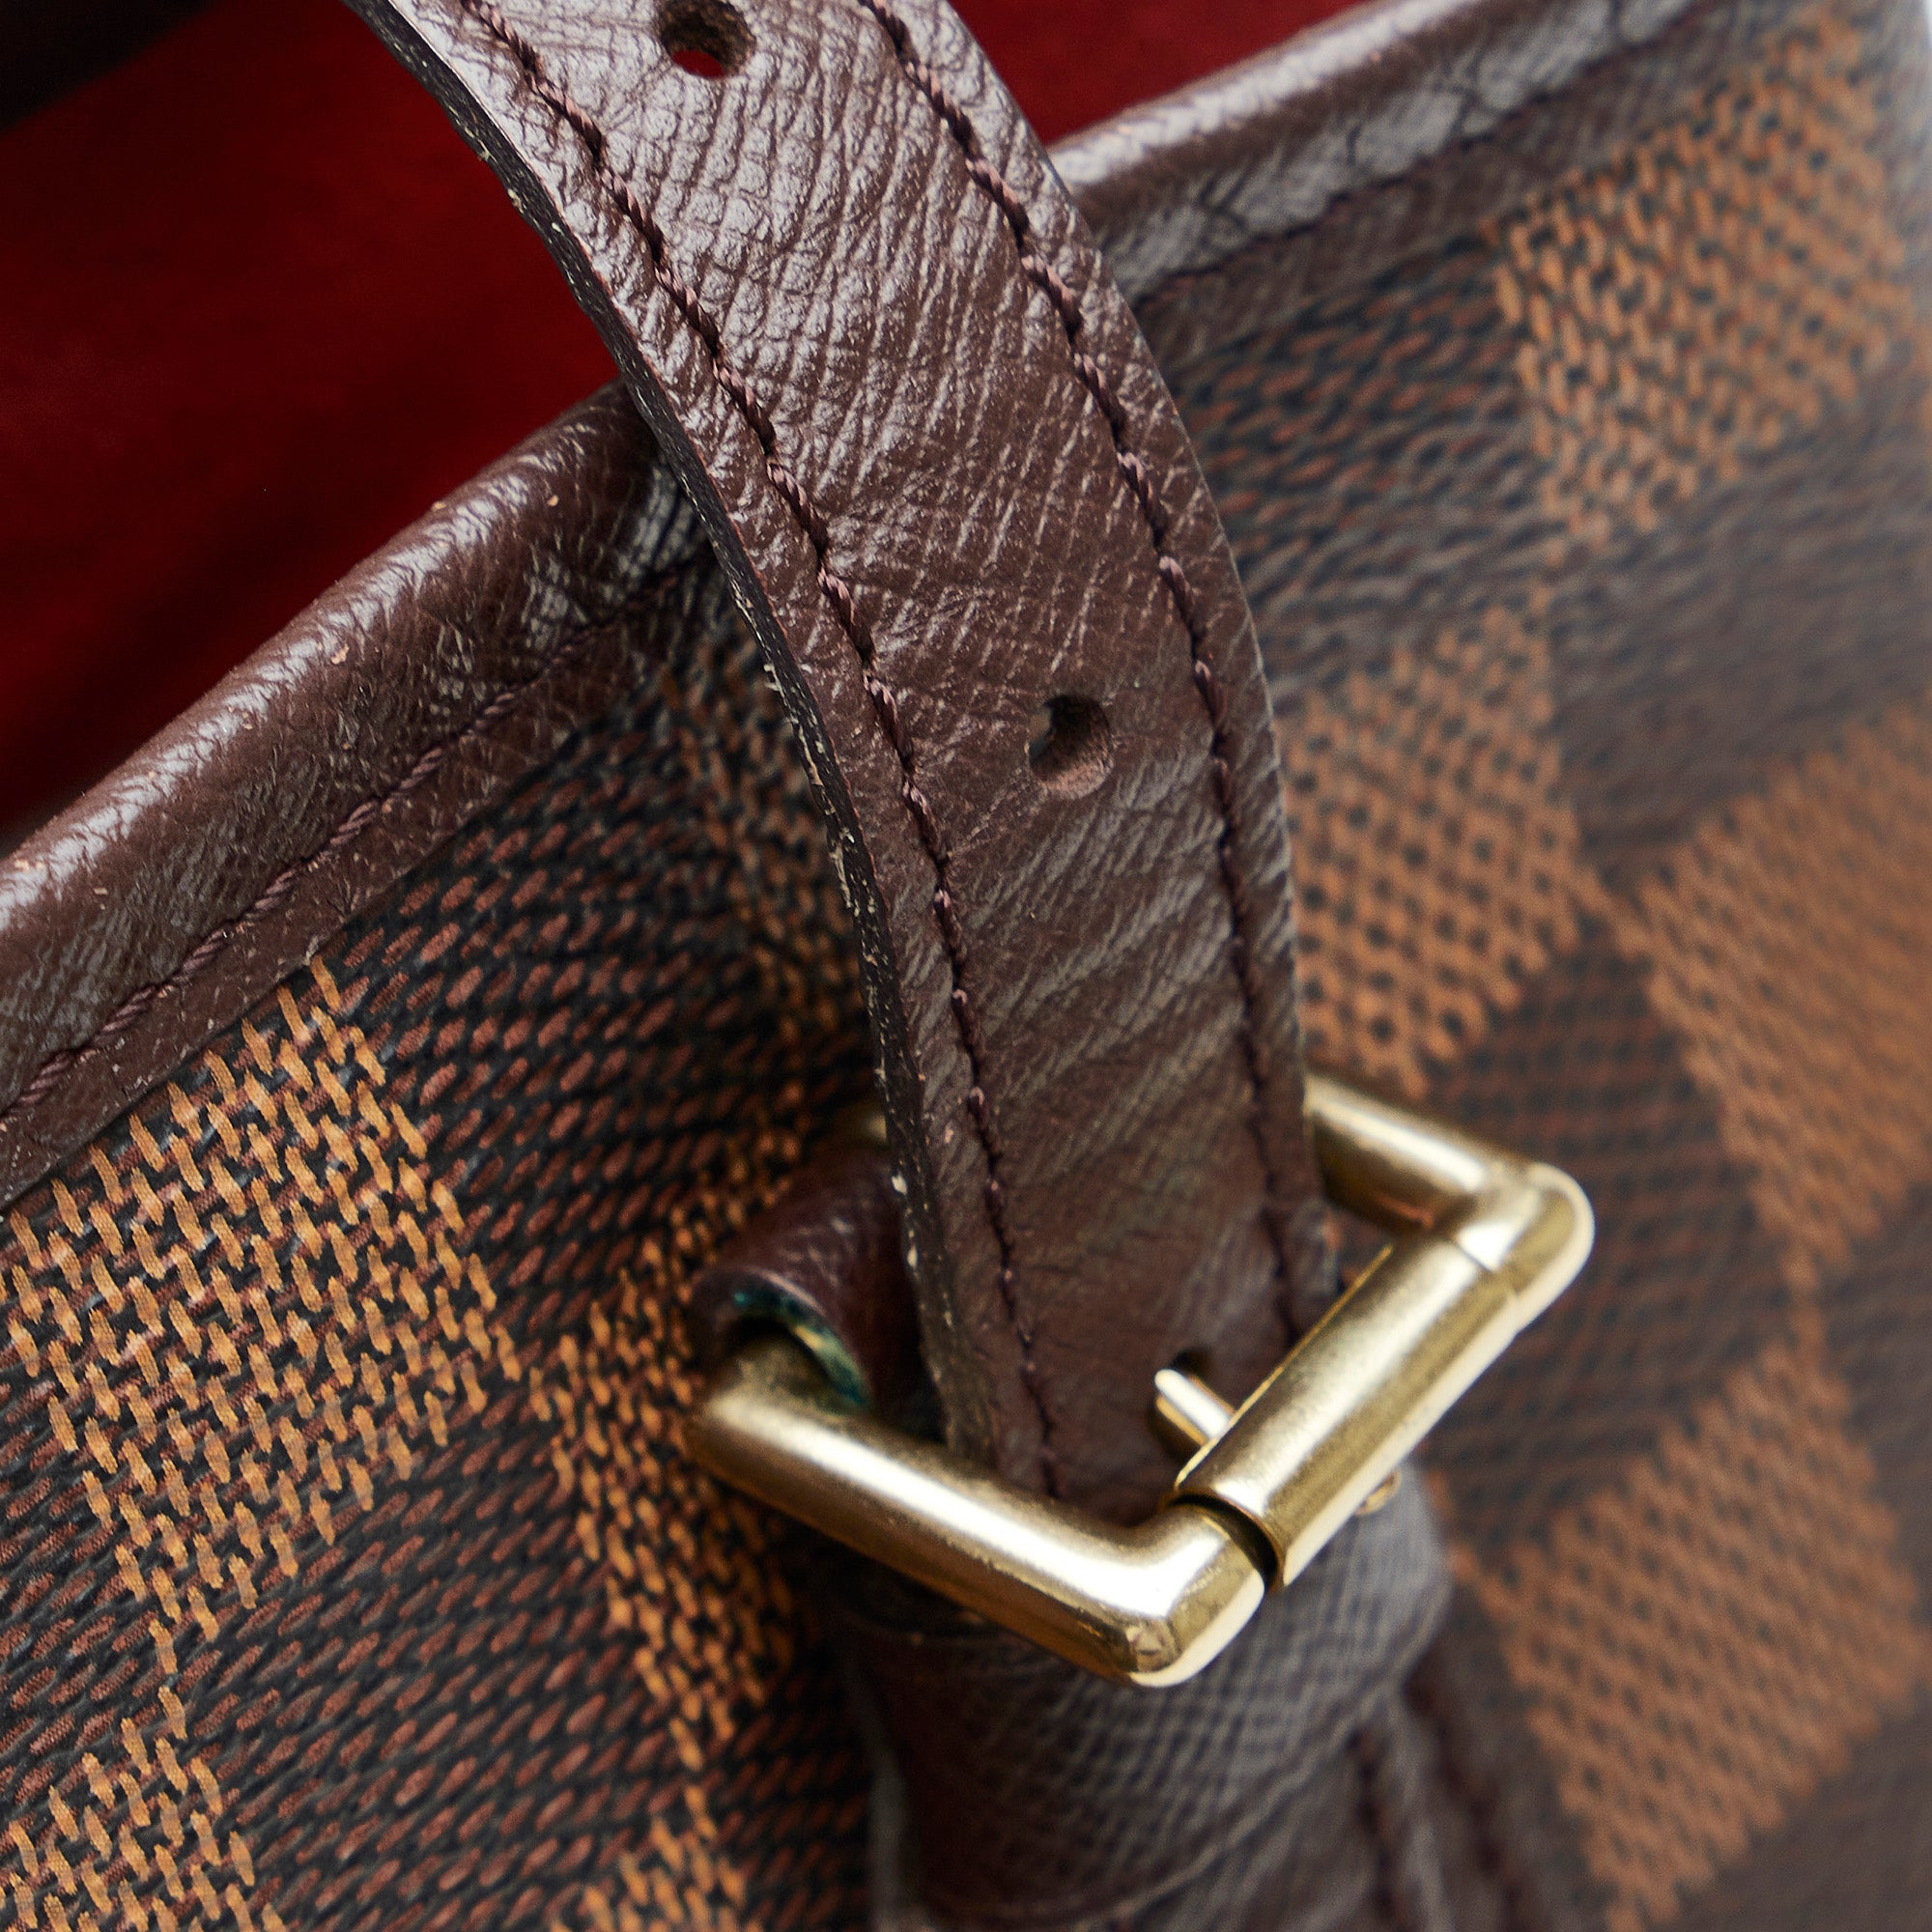 Louis Vuitton Authentic Brown Damier Ebene Marais Bucket Bag with